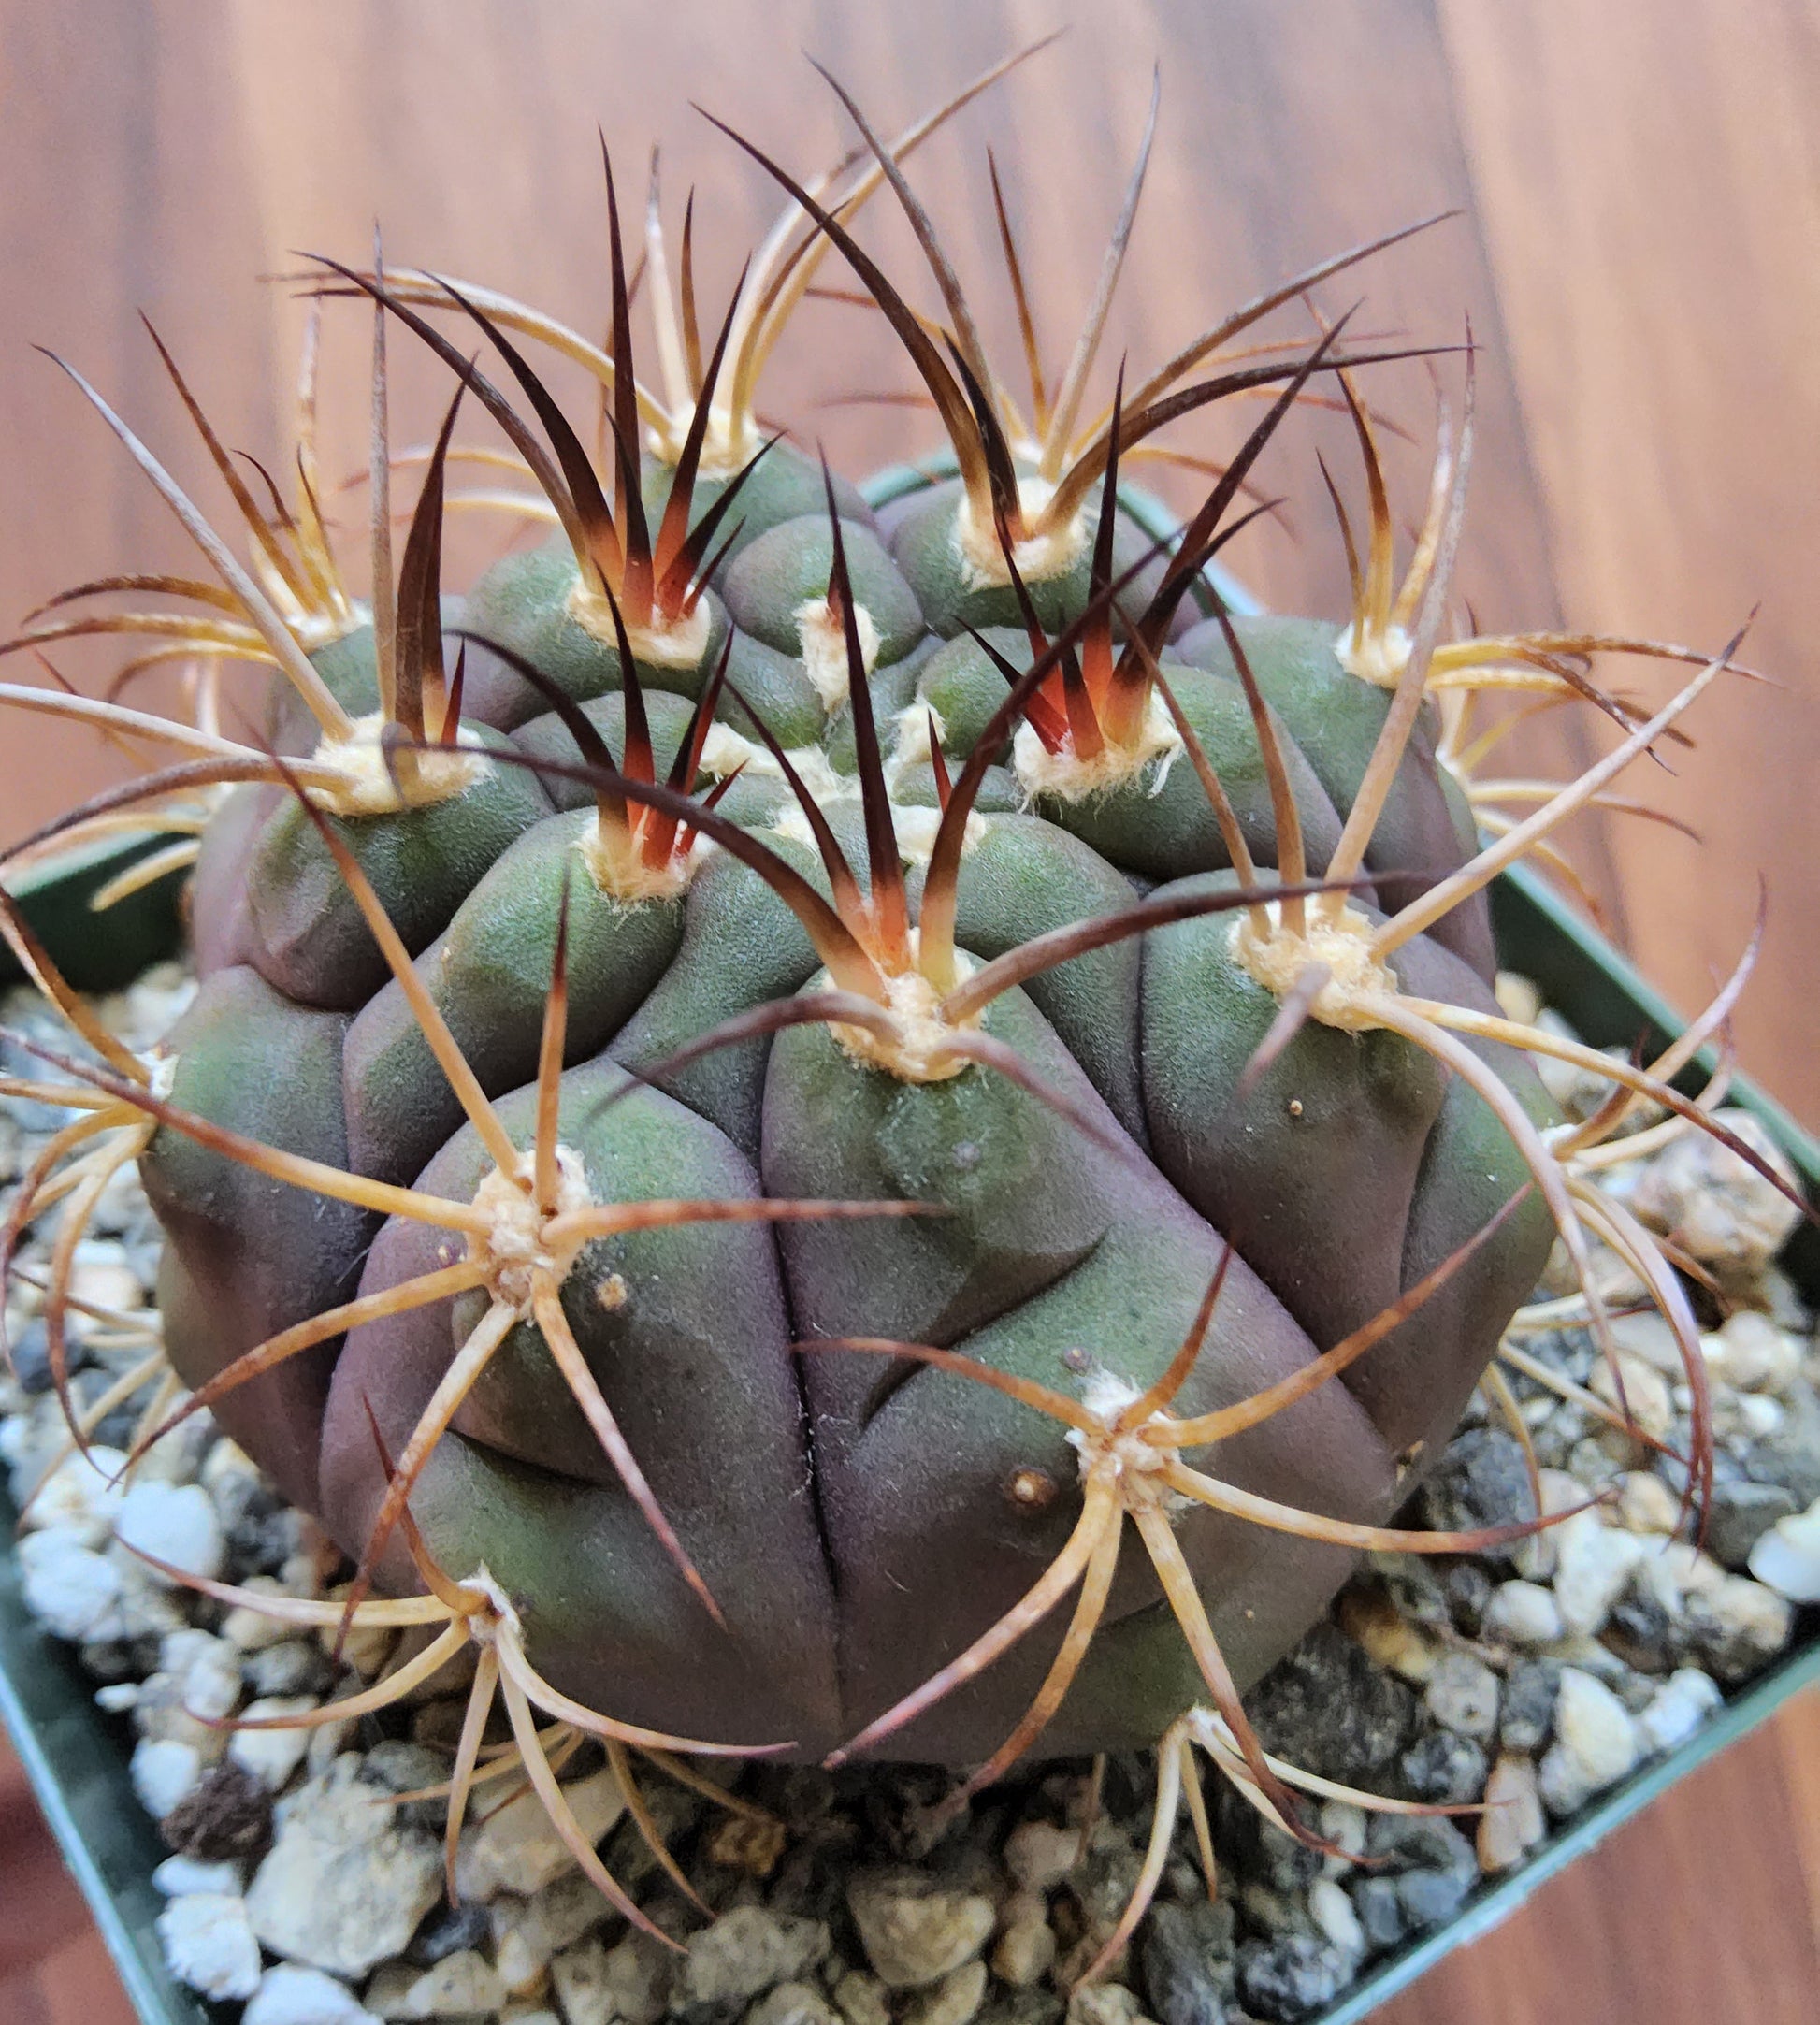 Gymnocalycium pflanzii v. albipulpa Live Cactus Growing in 4 Inch